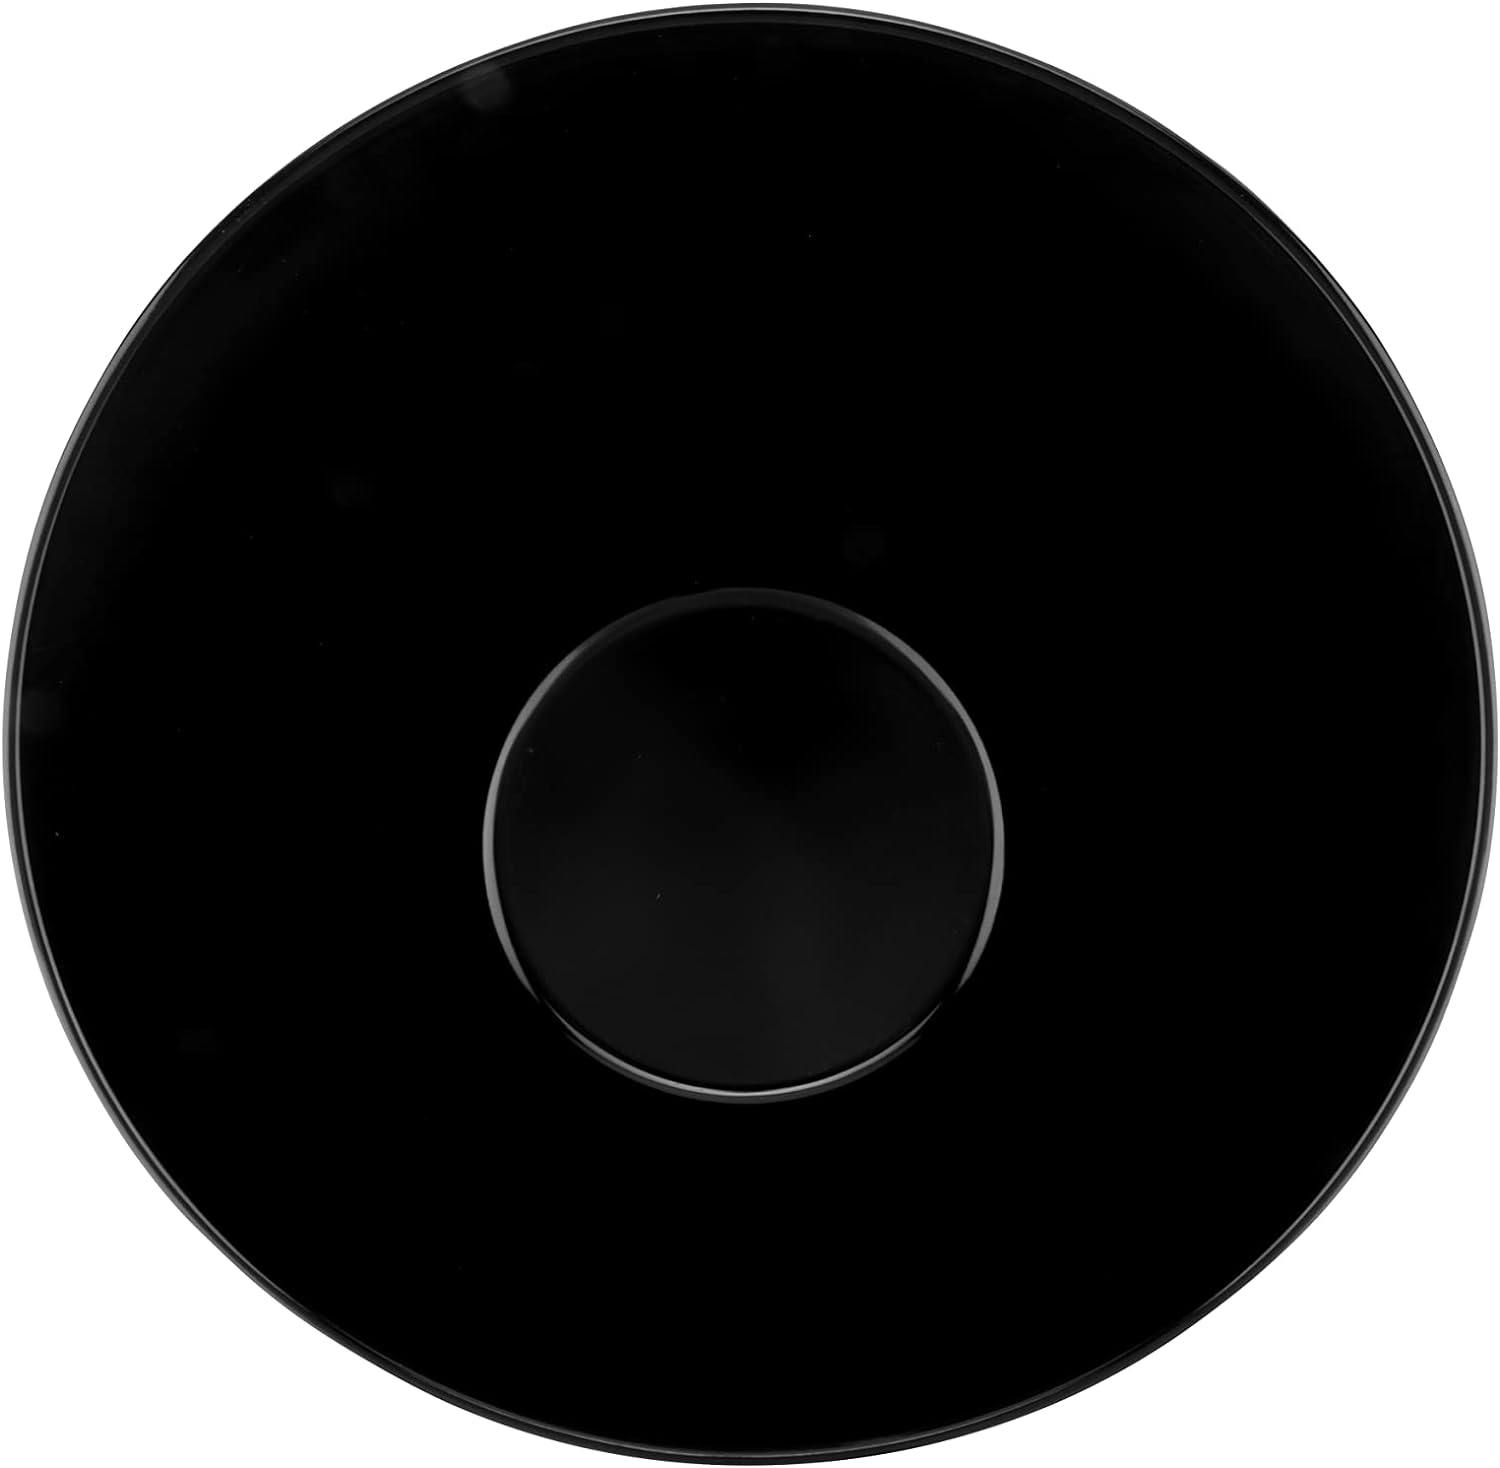 Black Elegance 1.9 Quart Cascading Serving Bowl for All Seasons